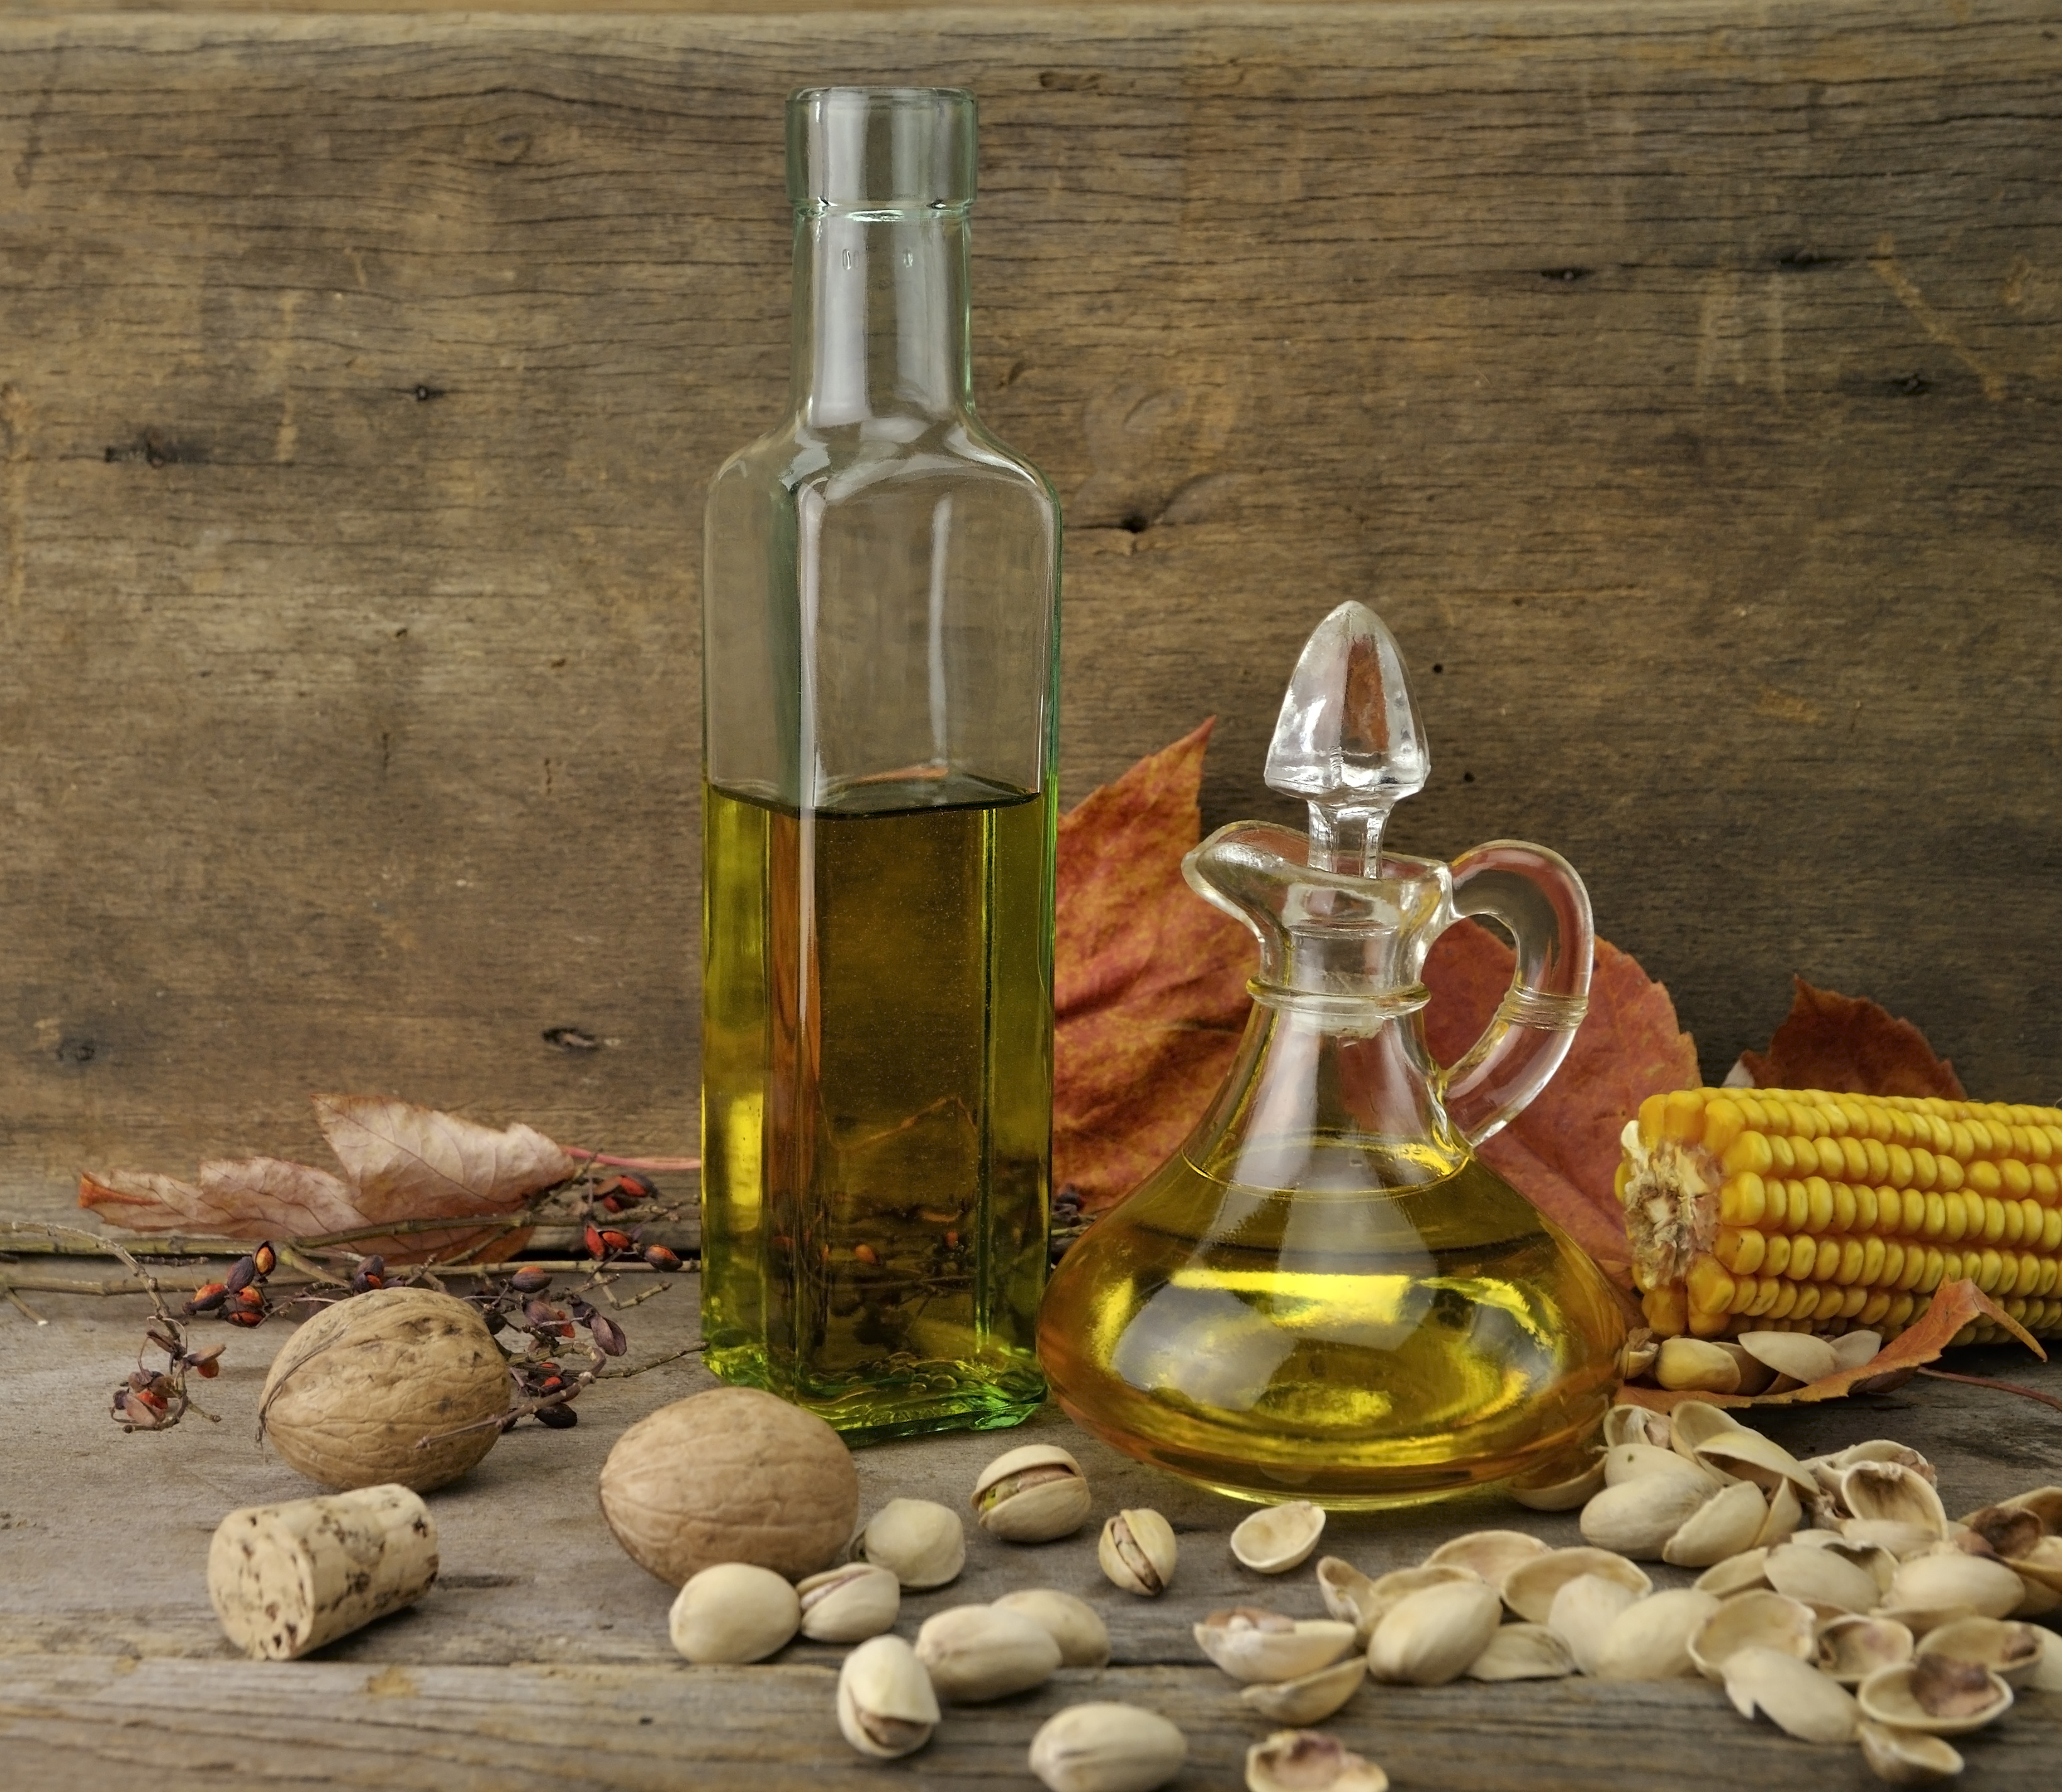 Pistachio Oil Benefits